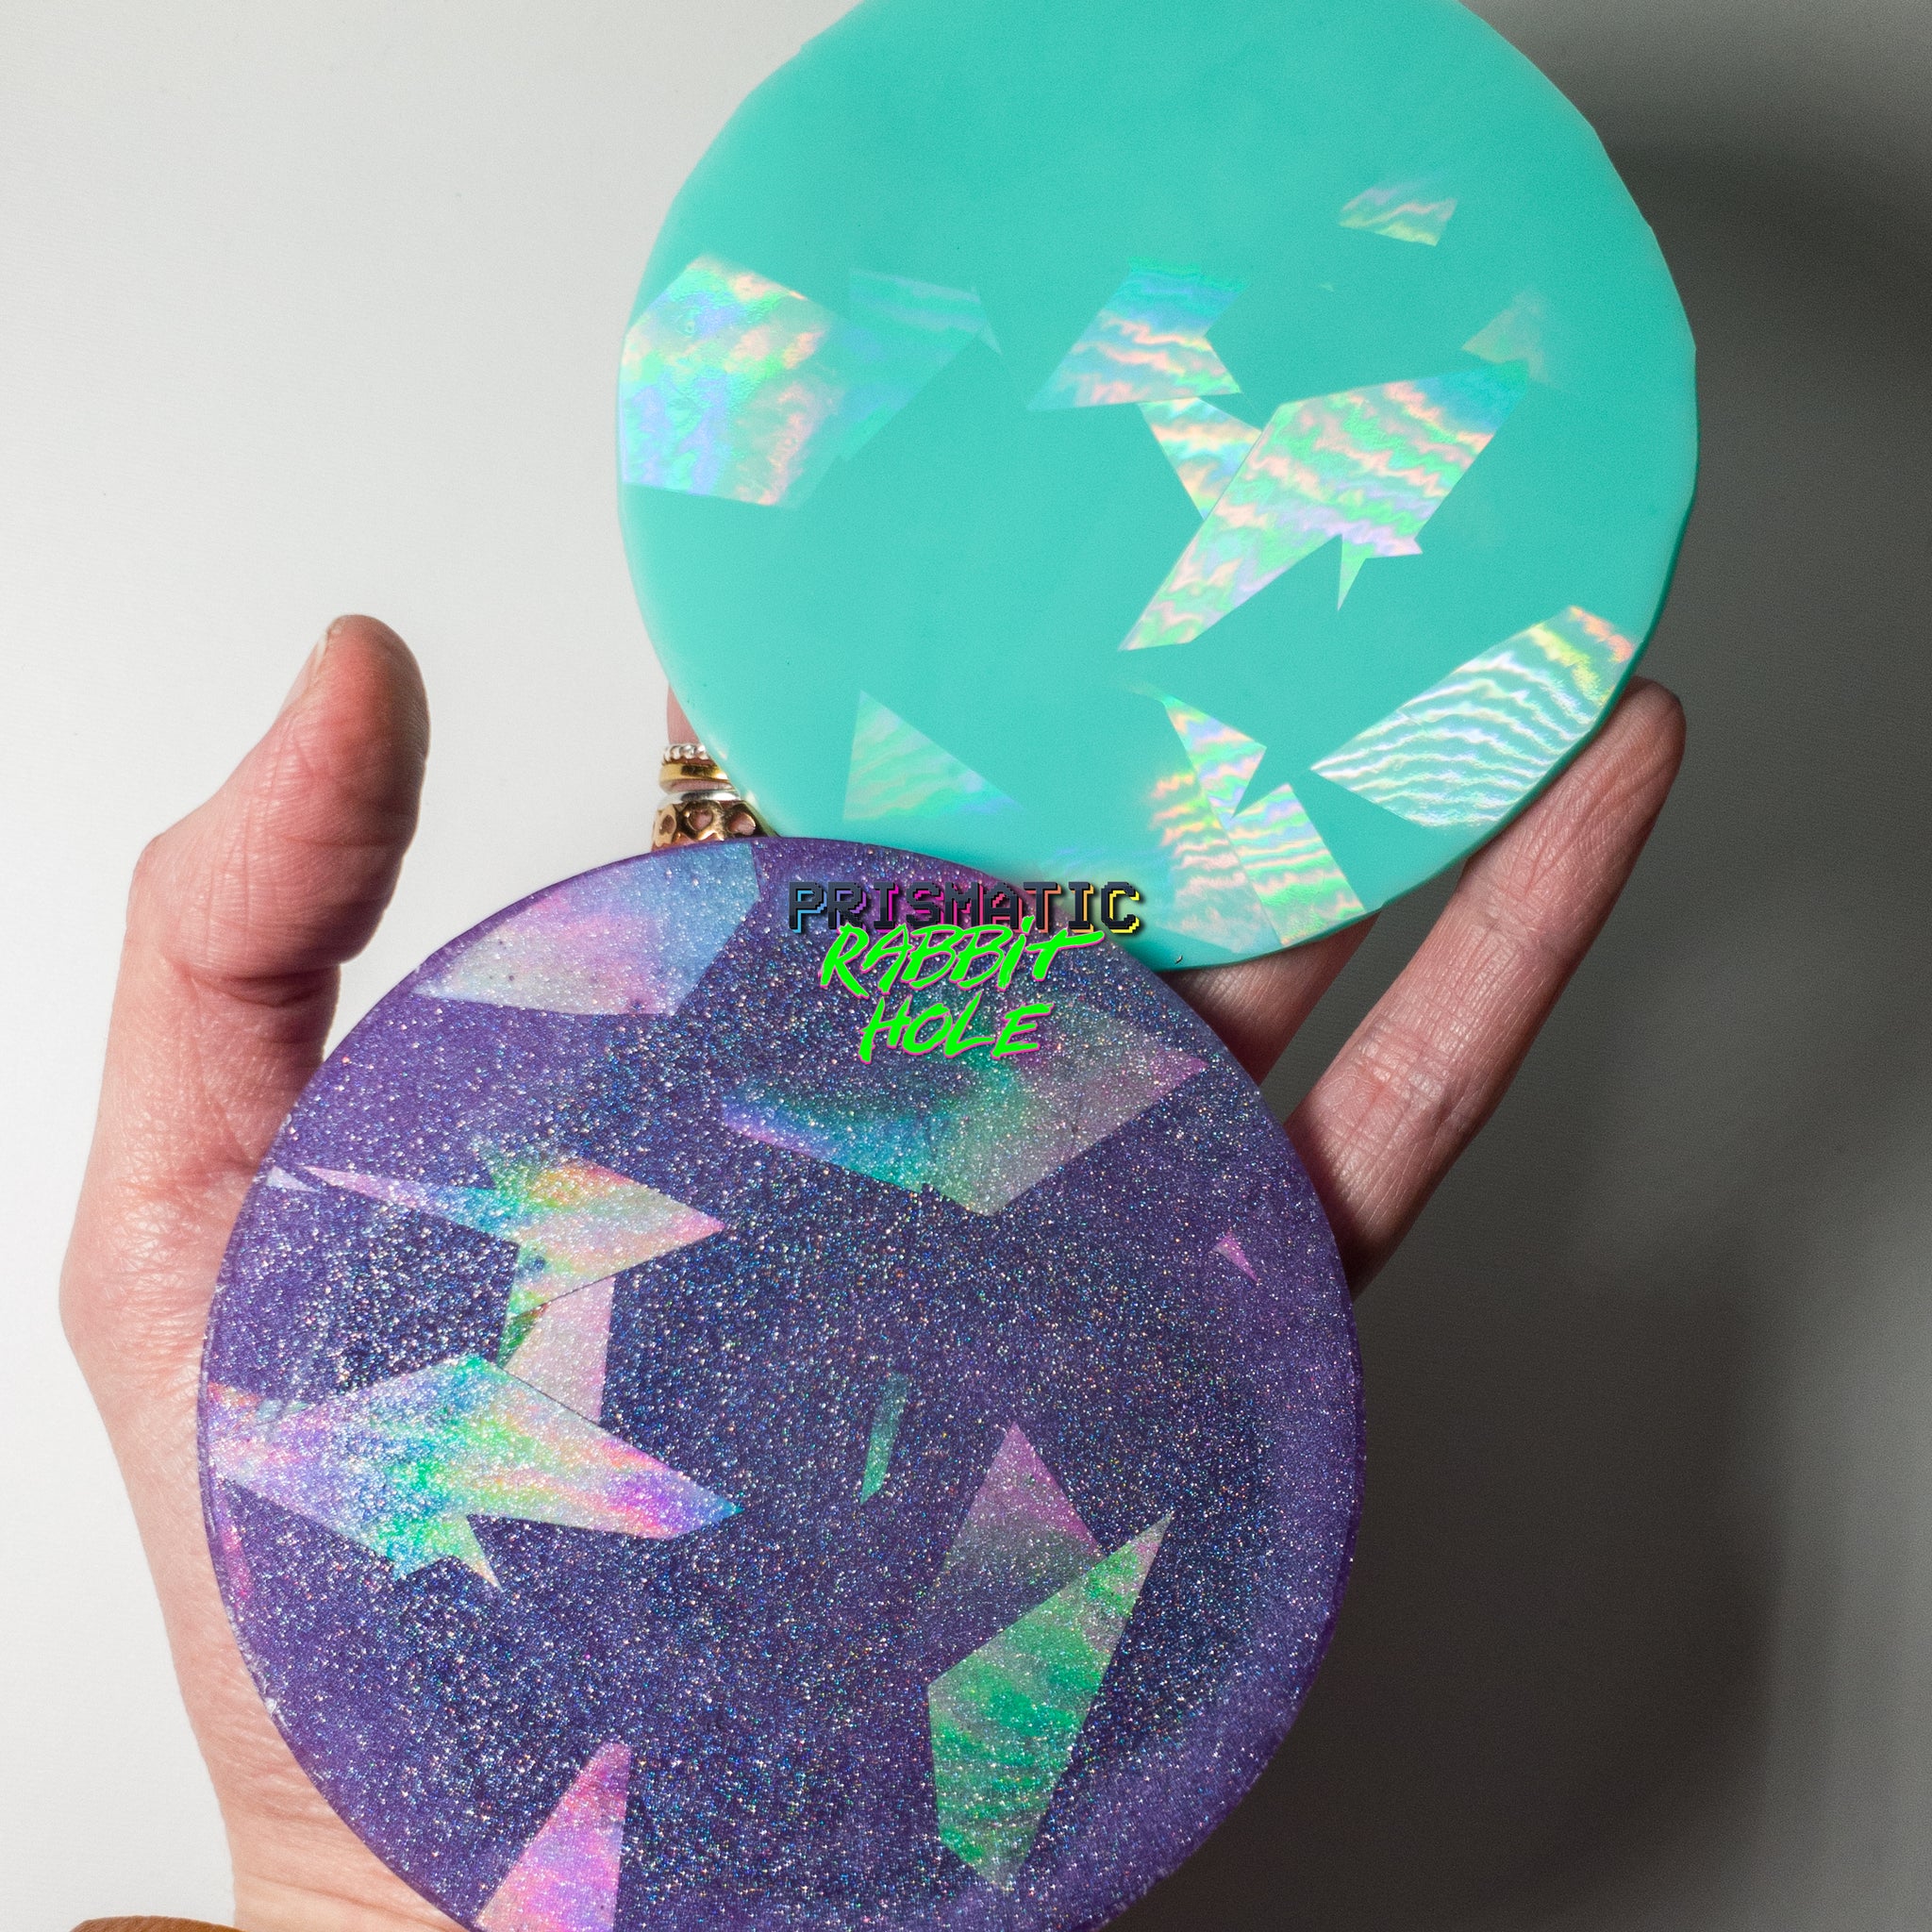 3.6 Holographic Starburst Coaster Mold – Prismatic Rabbit Hole